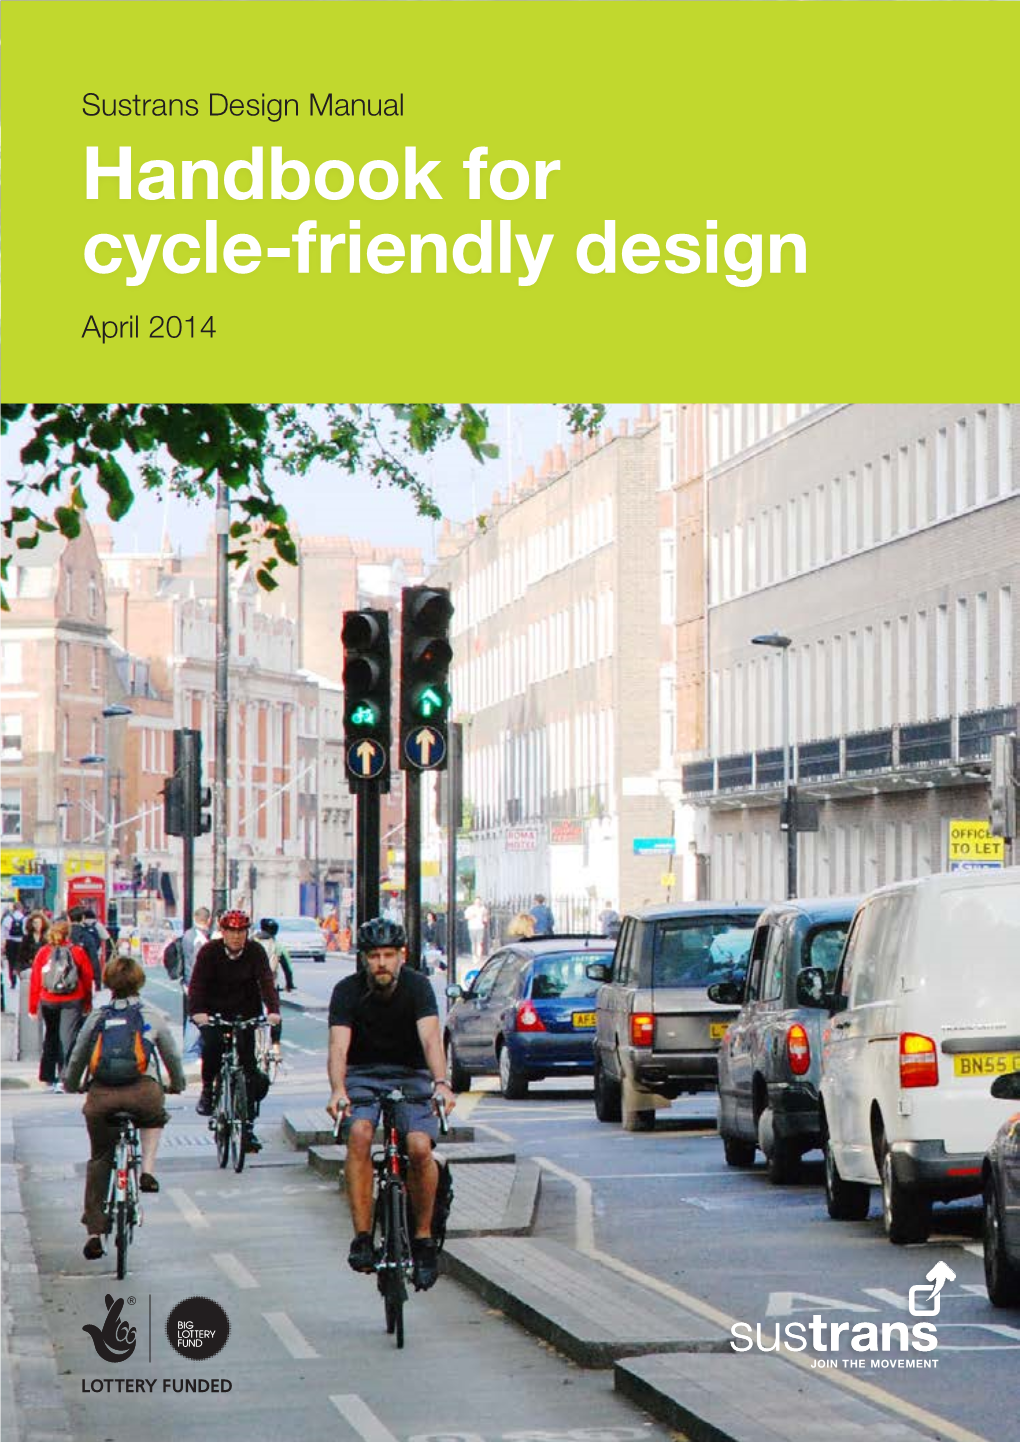 Sustrans Design Manual Handbook for Cycle-Friendly Design April 2014